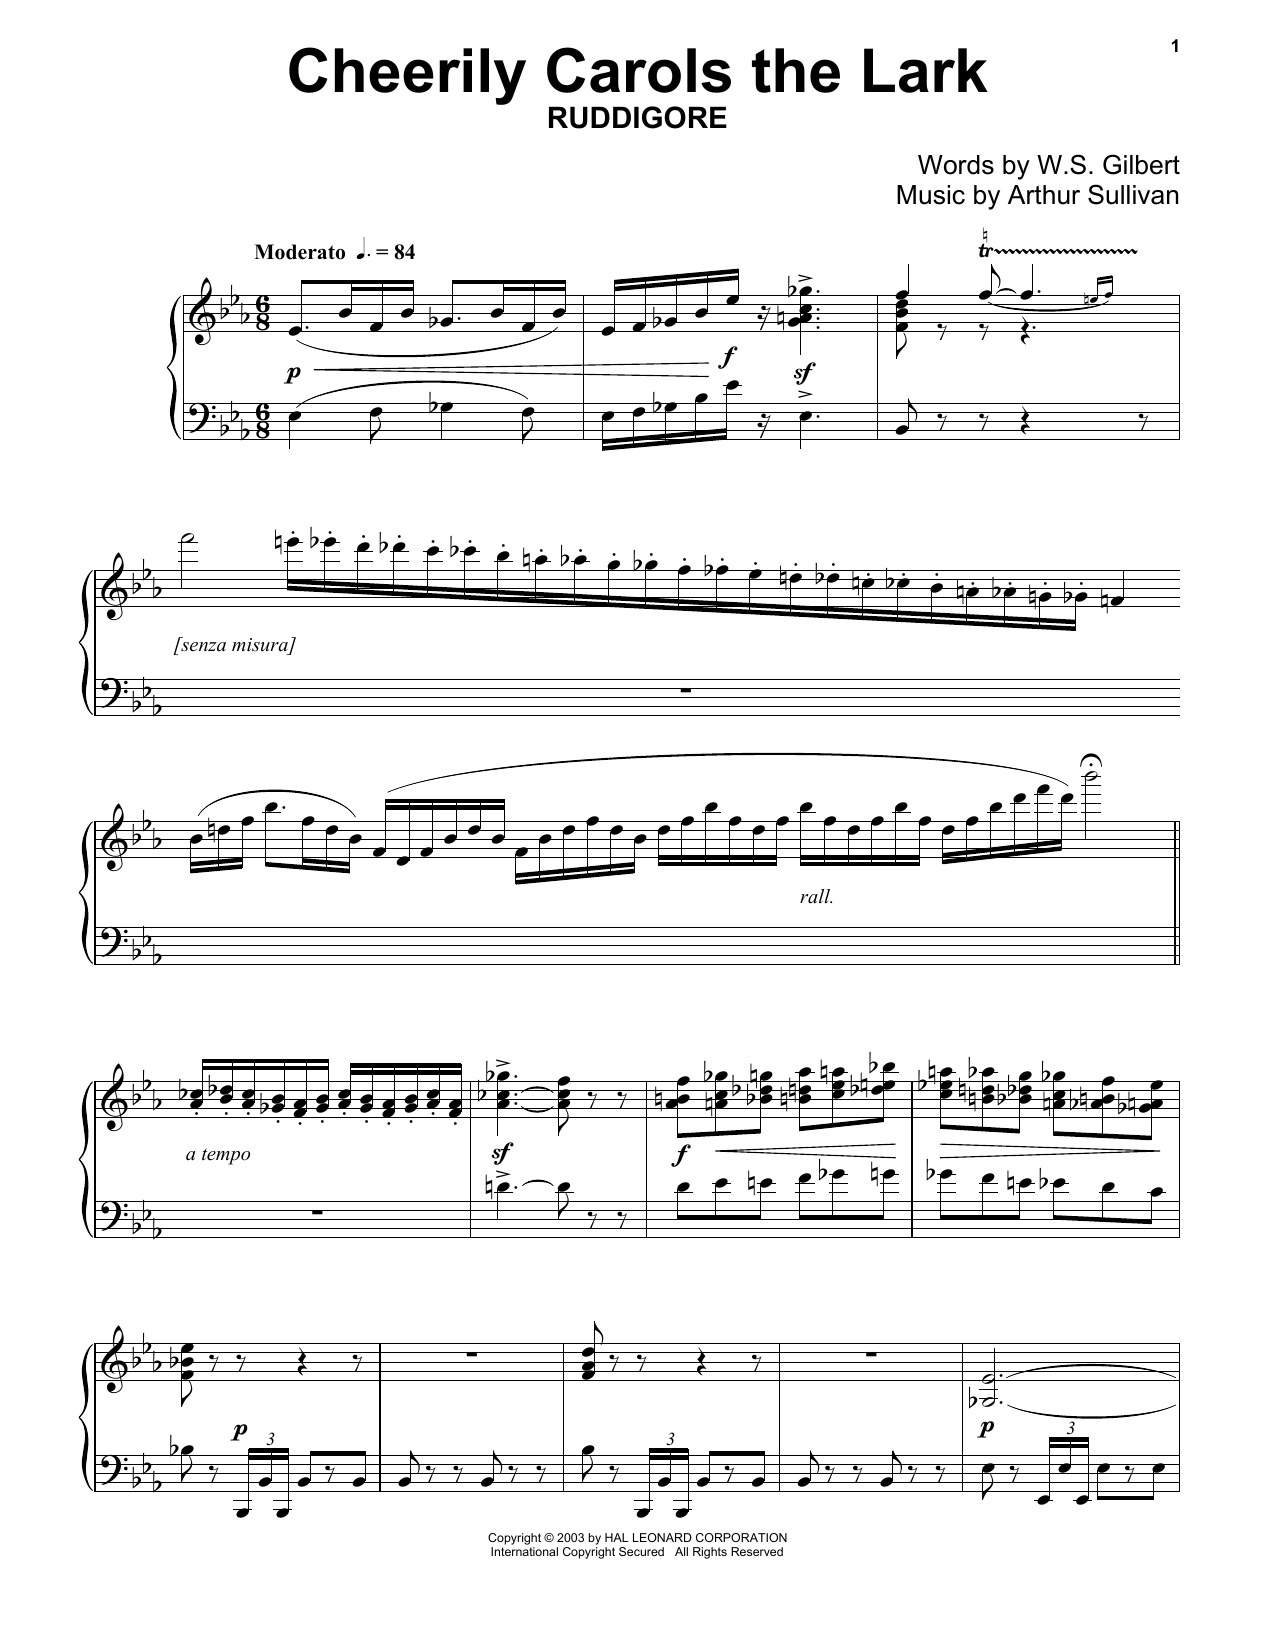 Gilbert & Sullivan Cheerily Carols The Lark Sheet Music Notes & Chords for Piano - Download or Print PDF